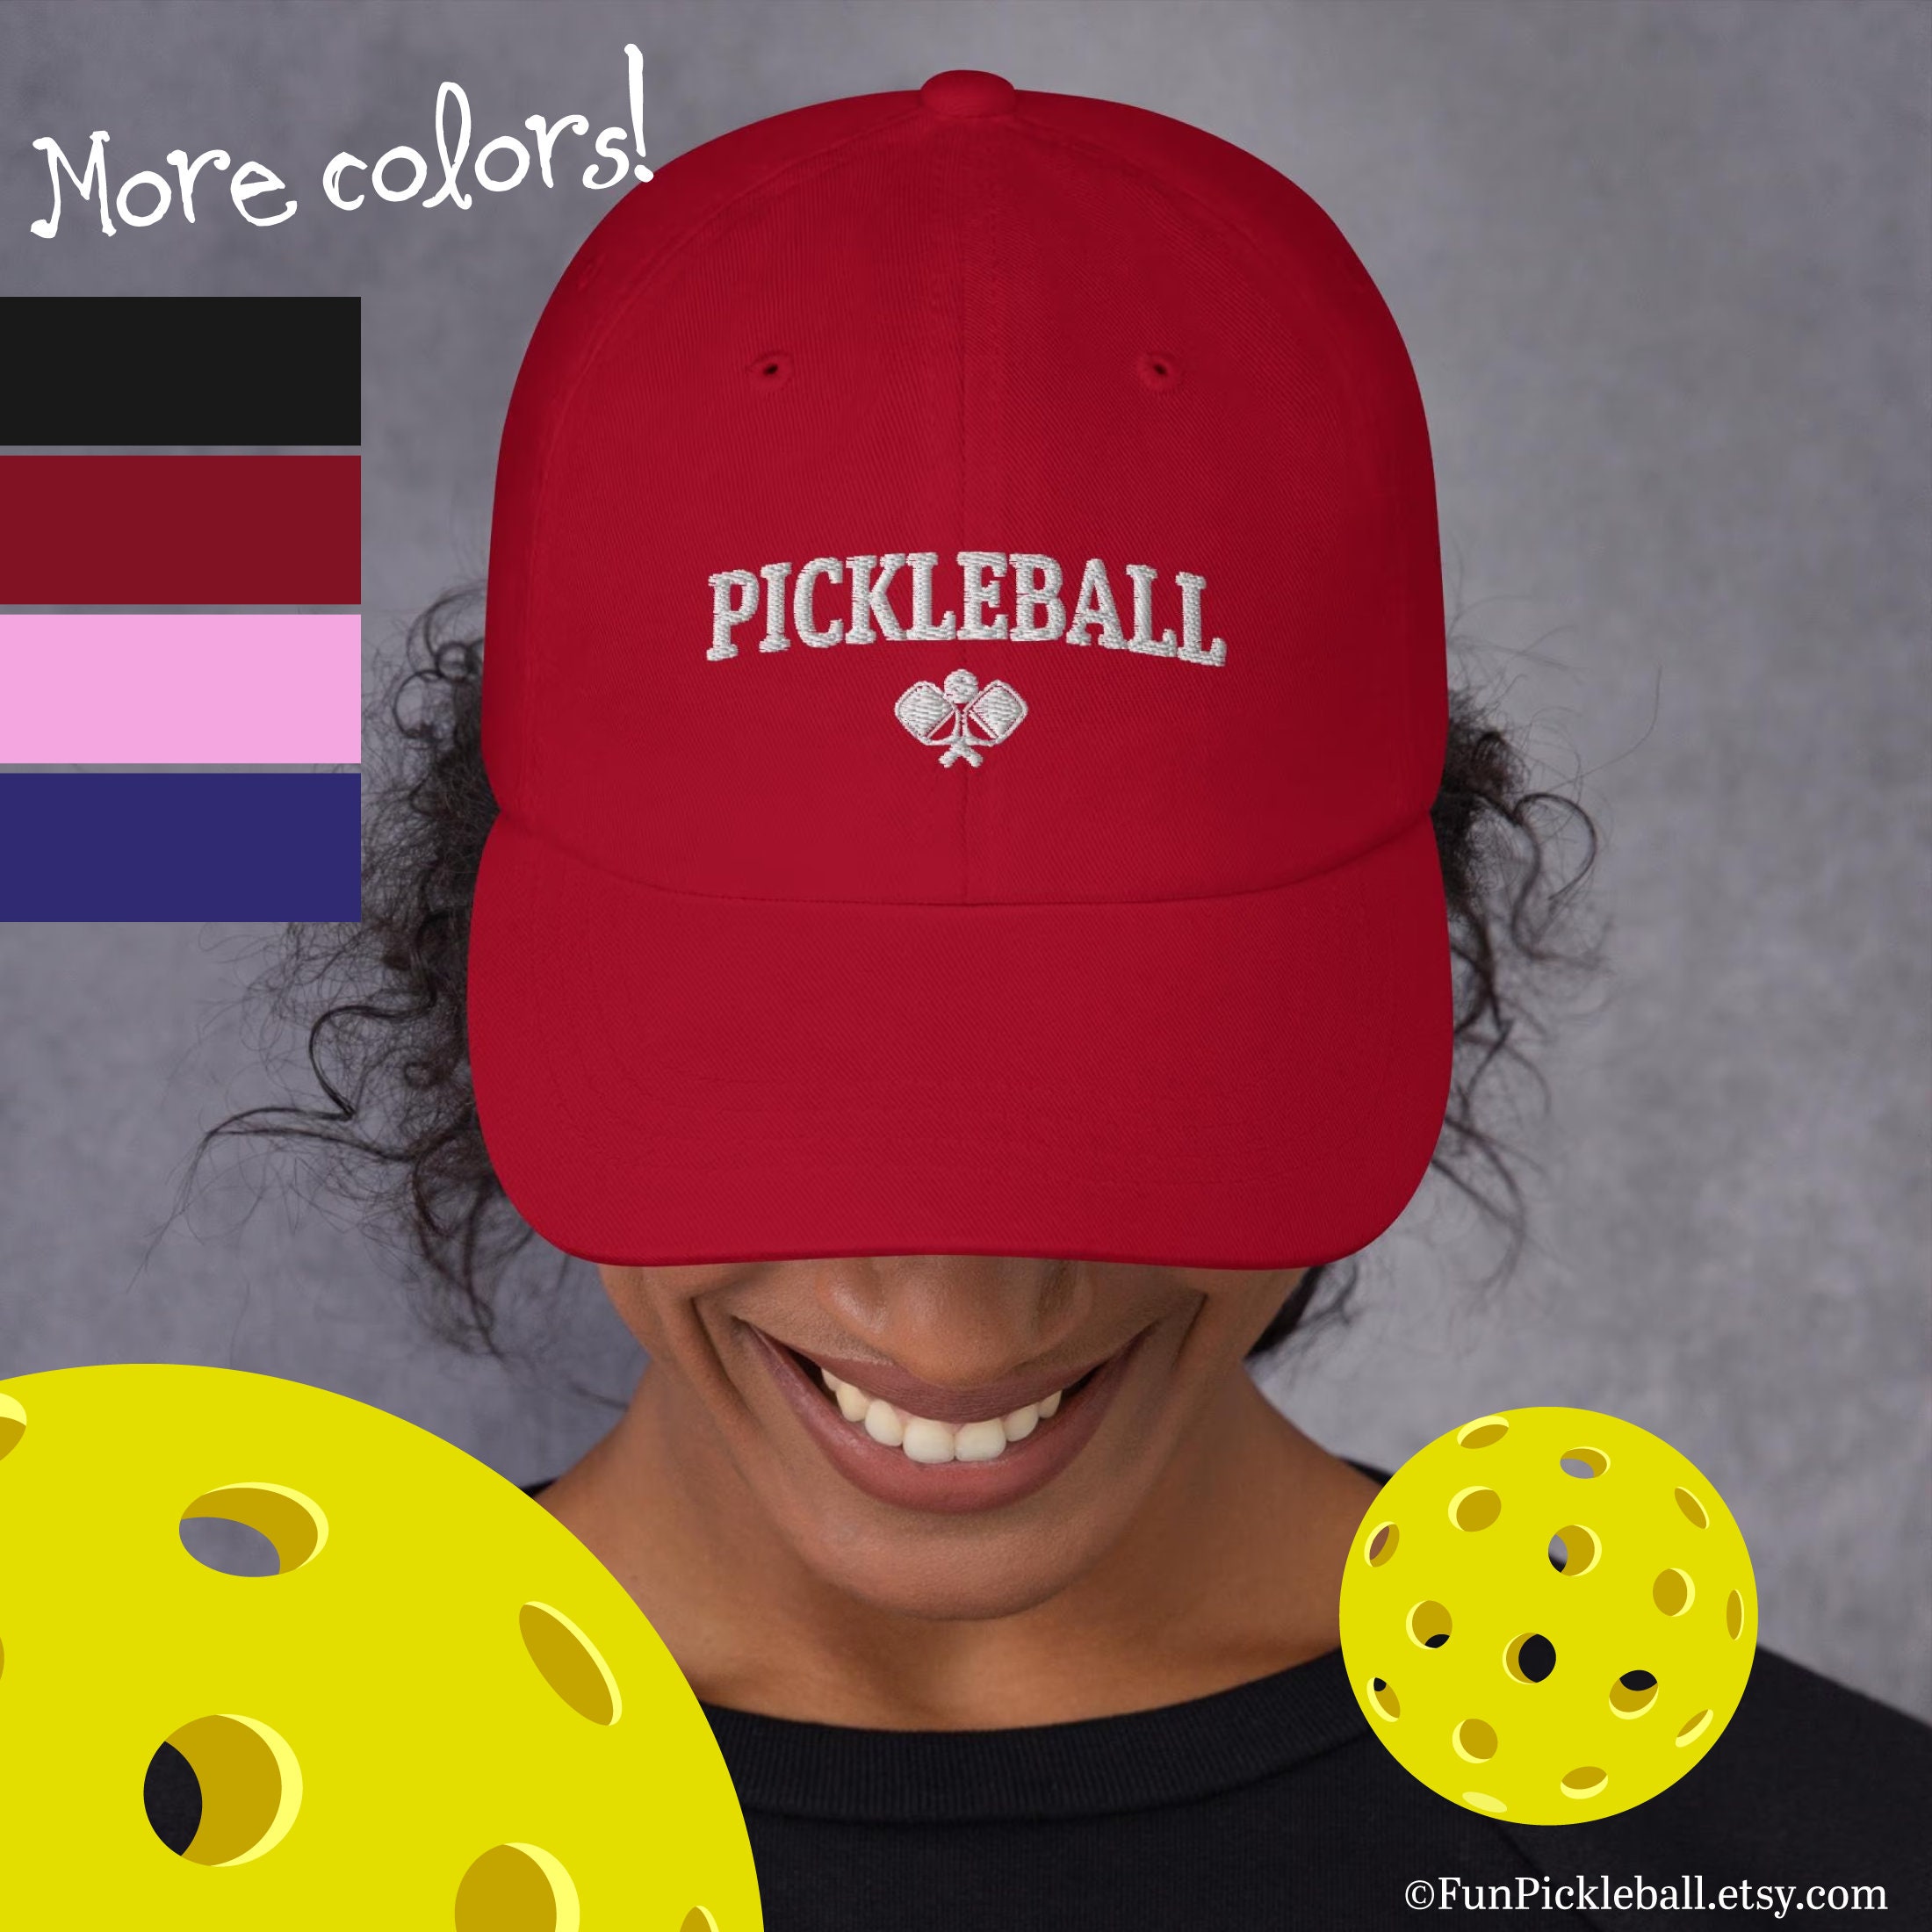 Original Pickleball Hats Perfect Pickleball Gift for Men, Women & Kids -  Great for Beginners or Professionals!